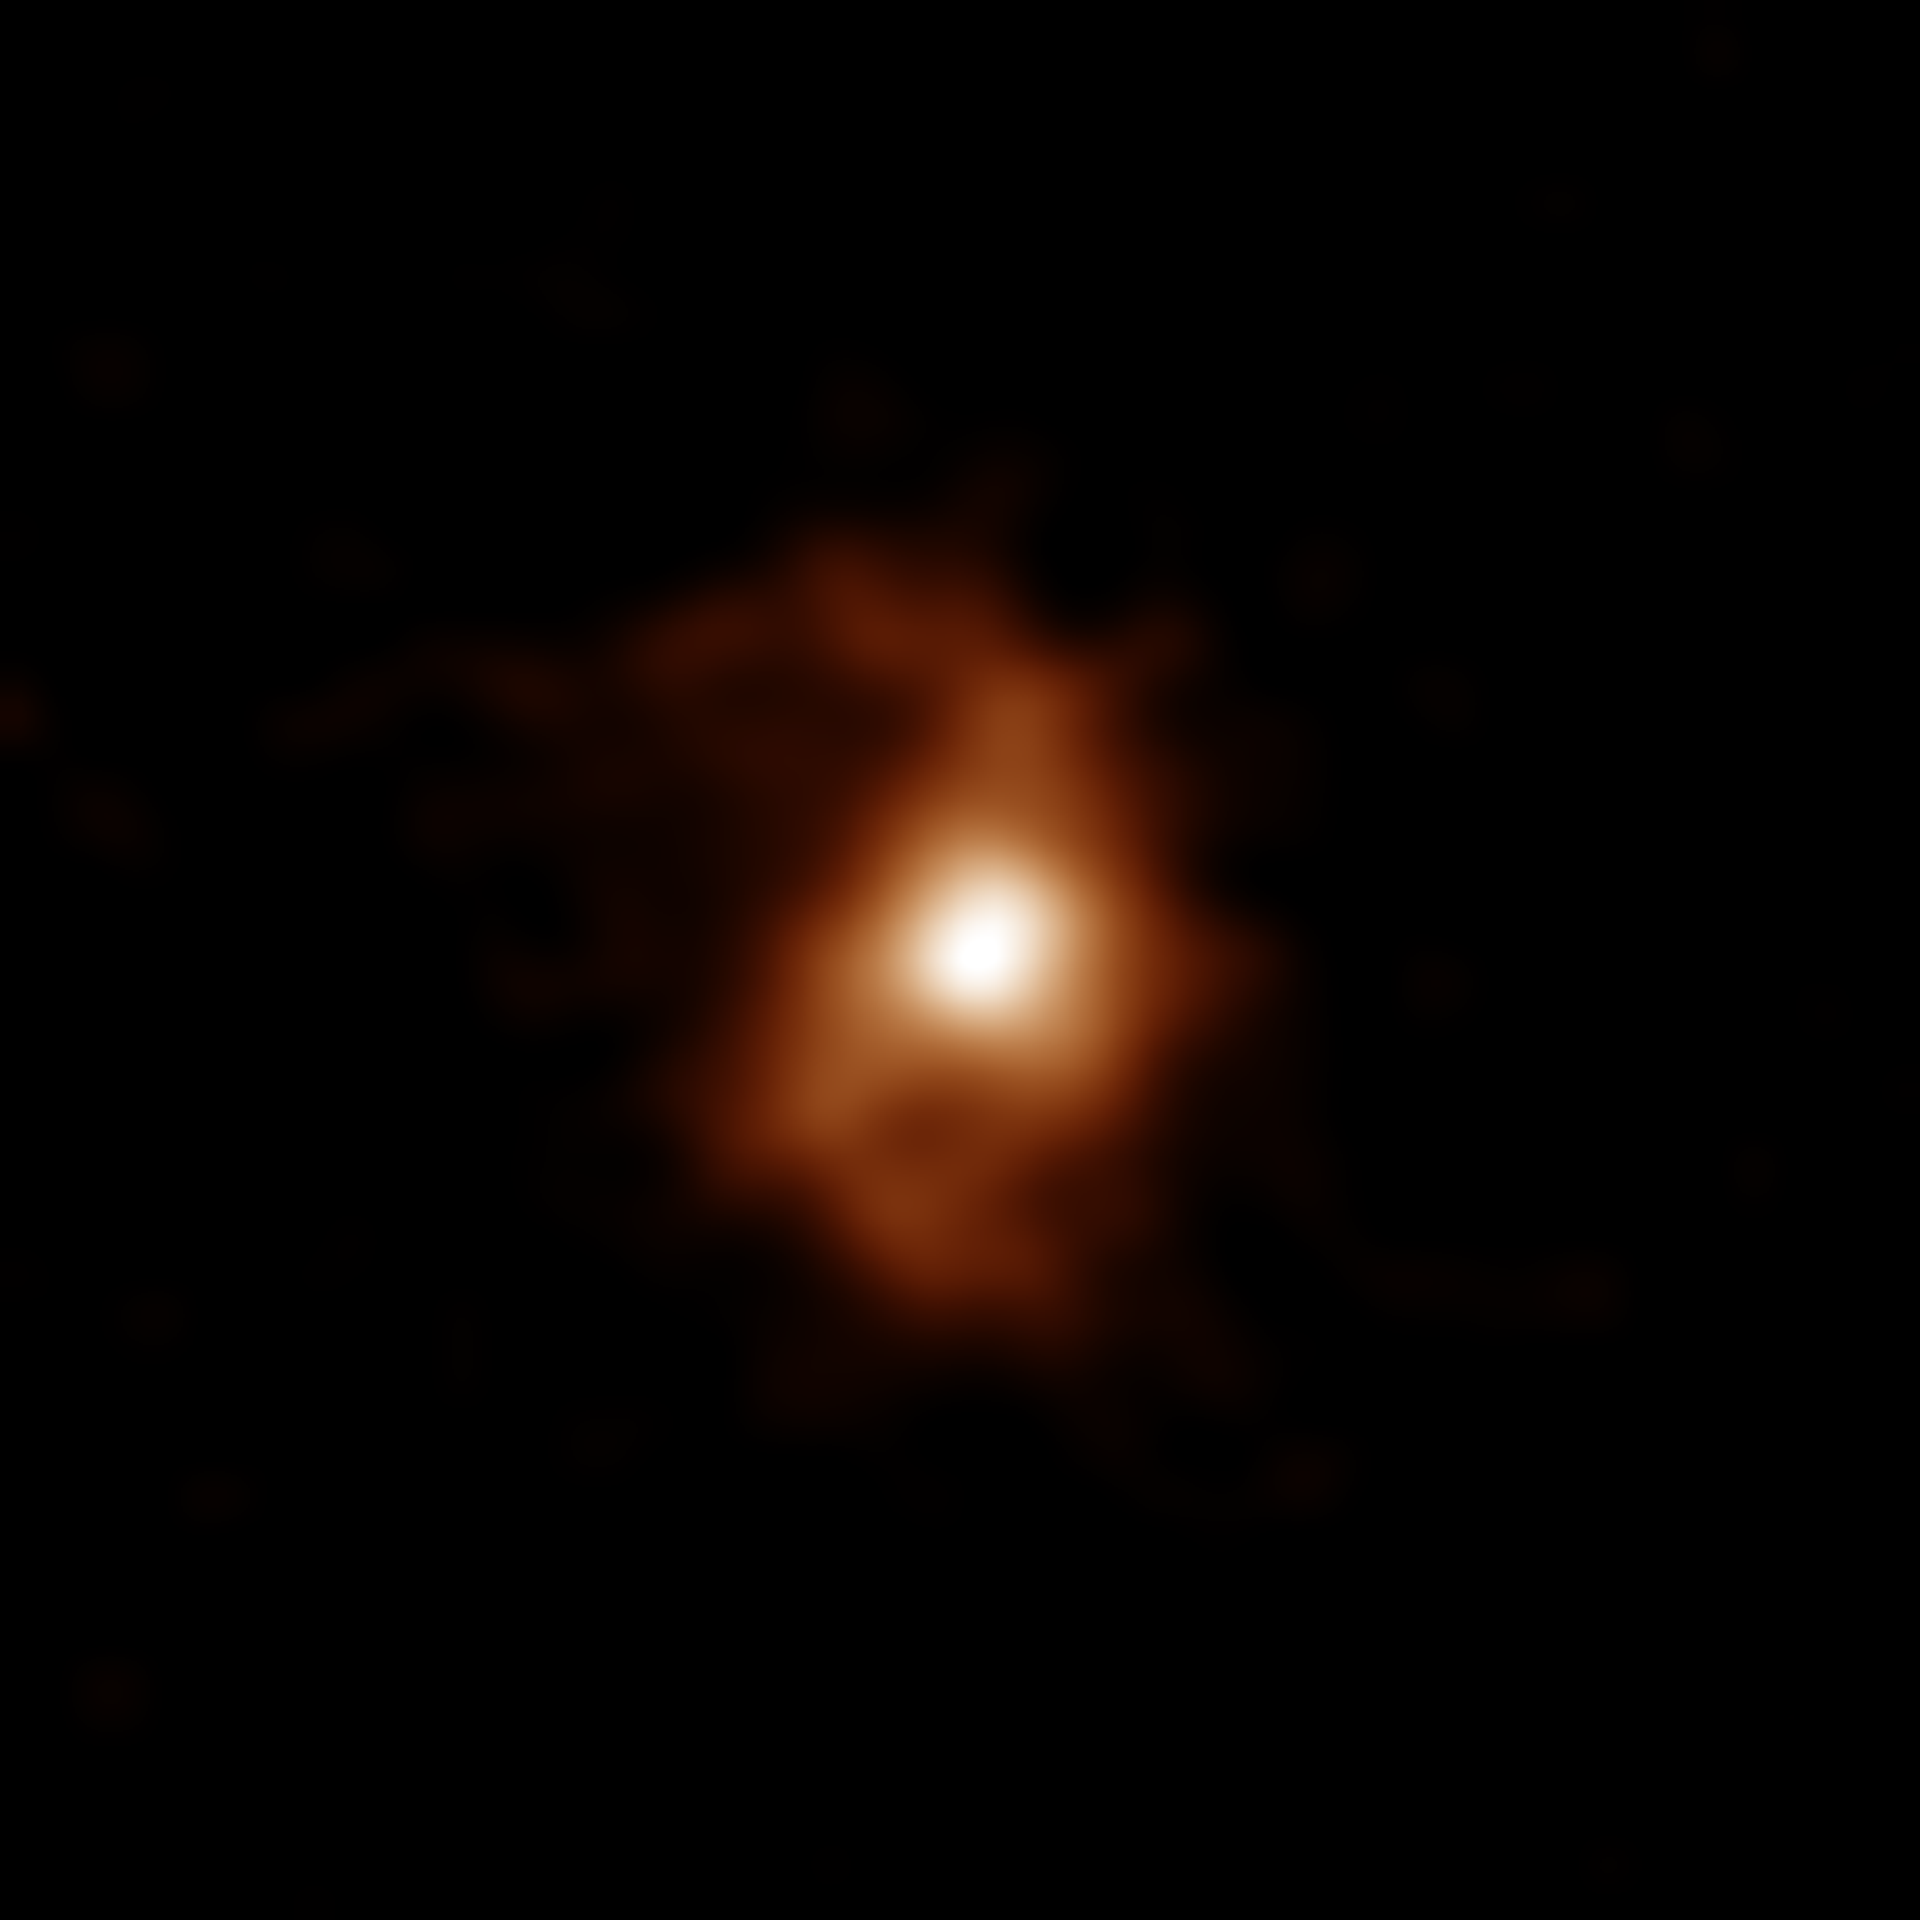 La galaxia espiral BRI 1335–0417 - Sputnik Mundo, 1920, 21.05.2021